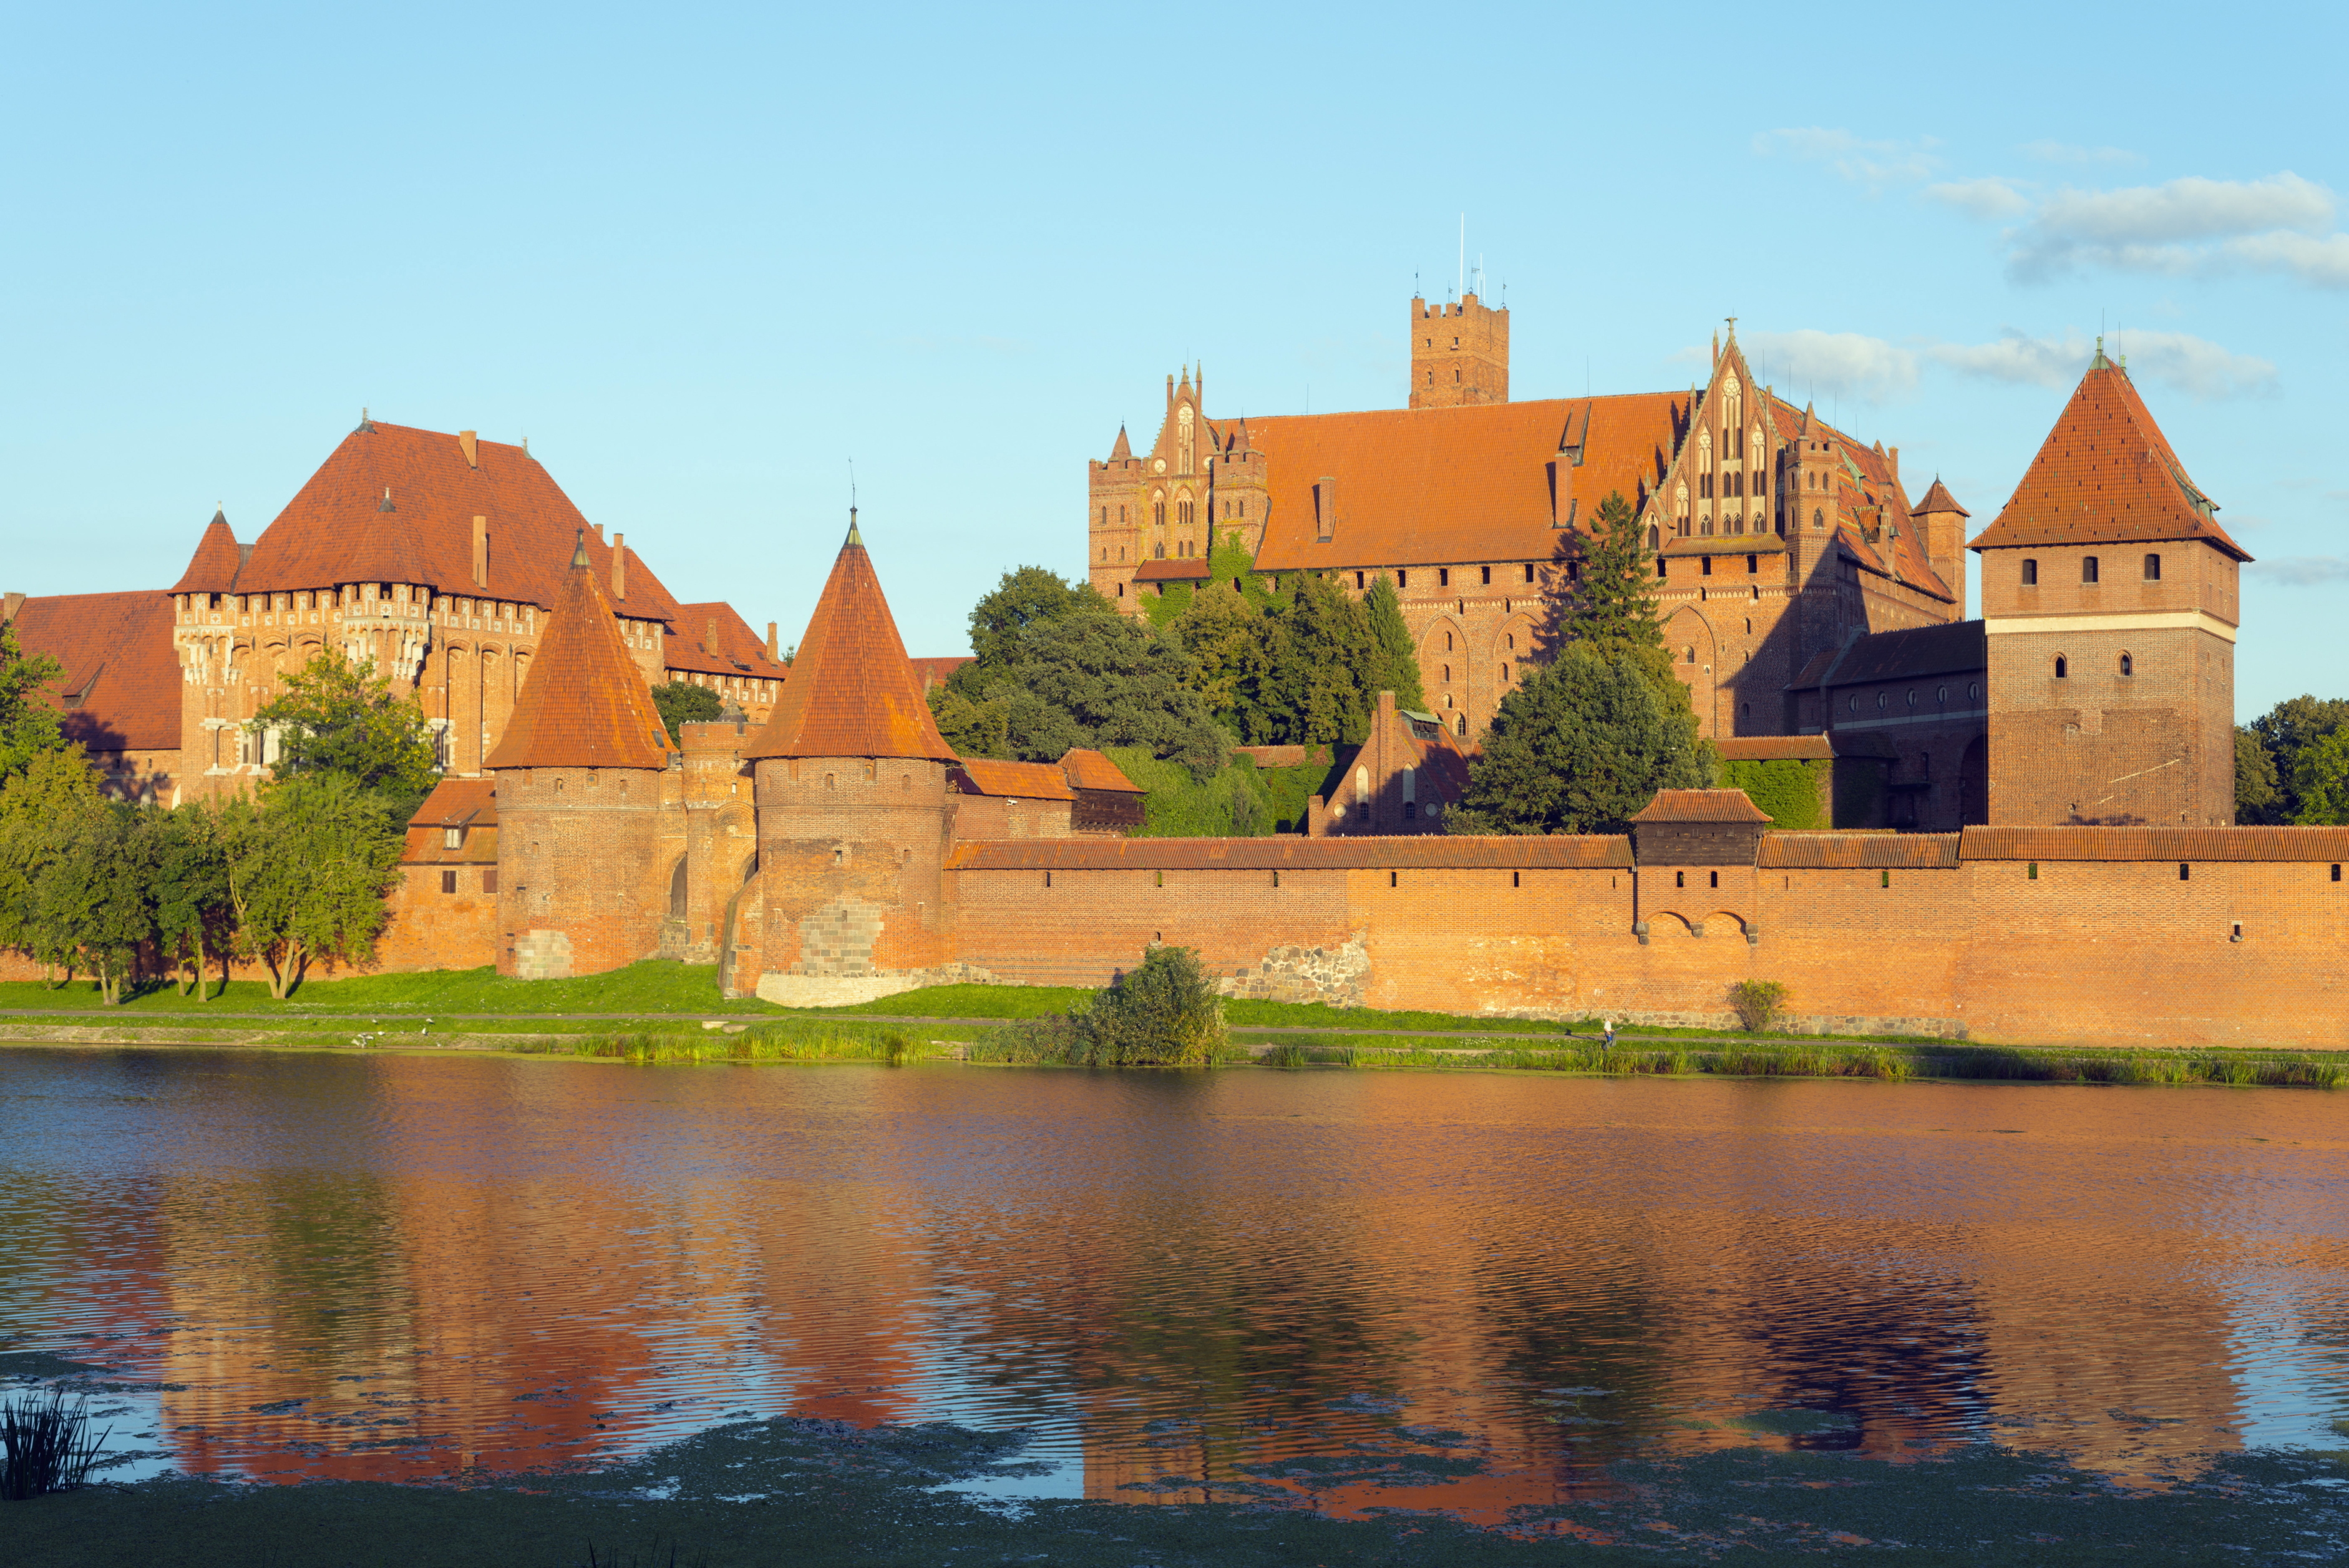 Medieval Malbork Castle, Marienburg Fortress of Mary, UNESCO World Heritage Site, Pomerania, Poland, Europe